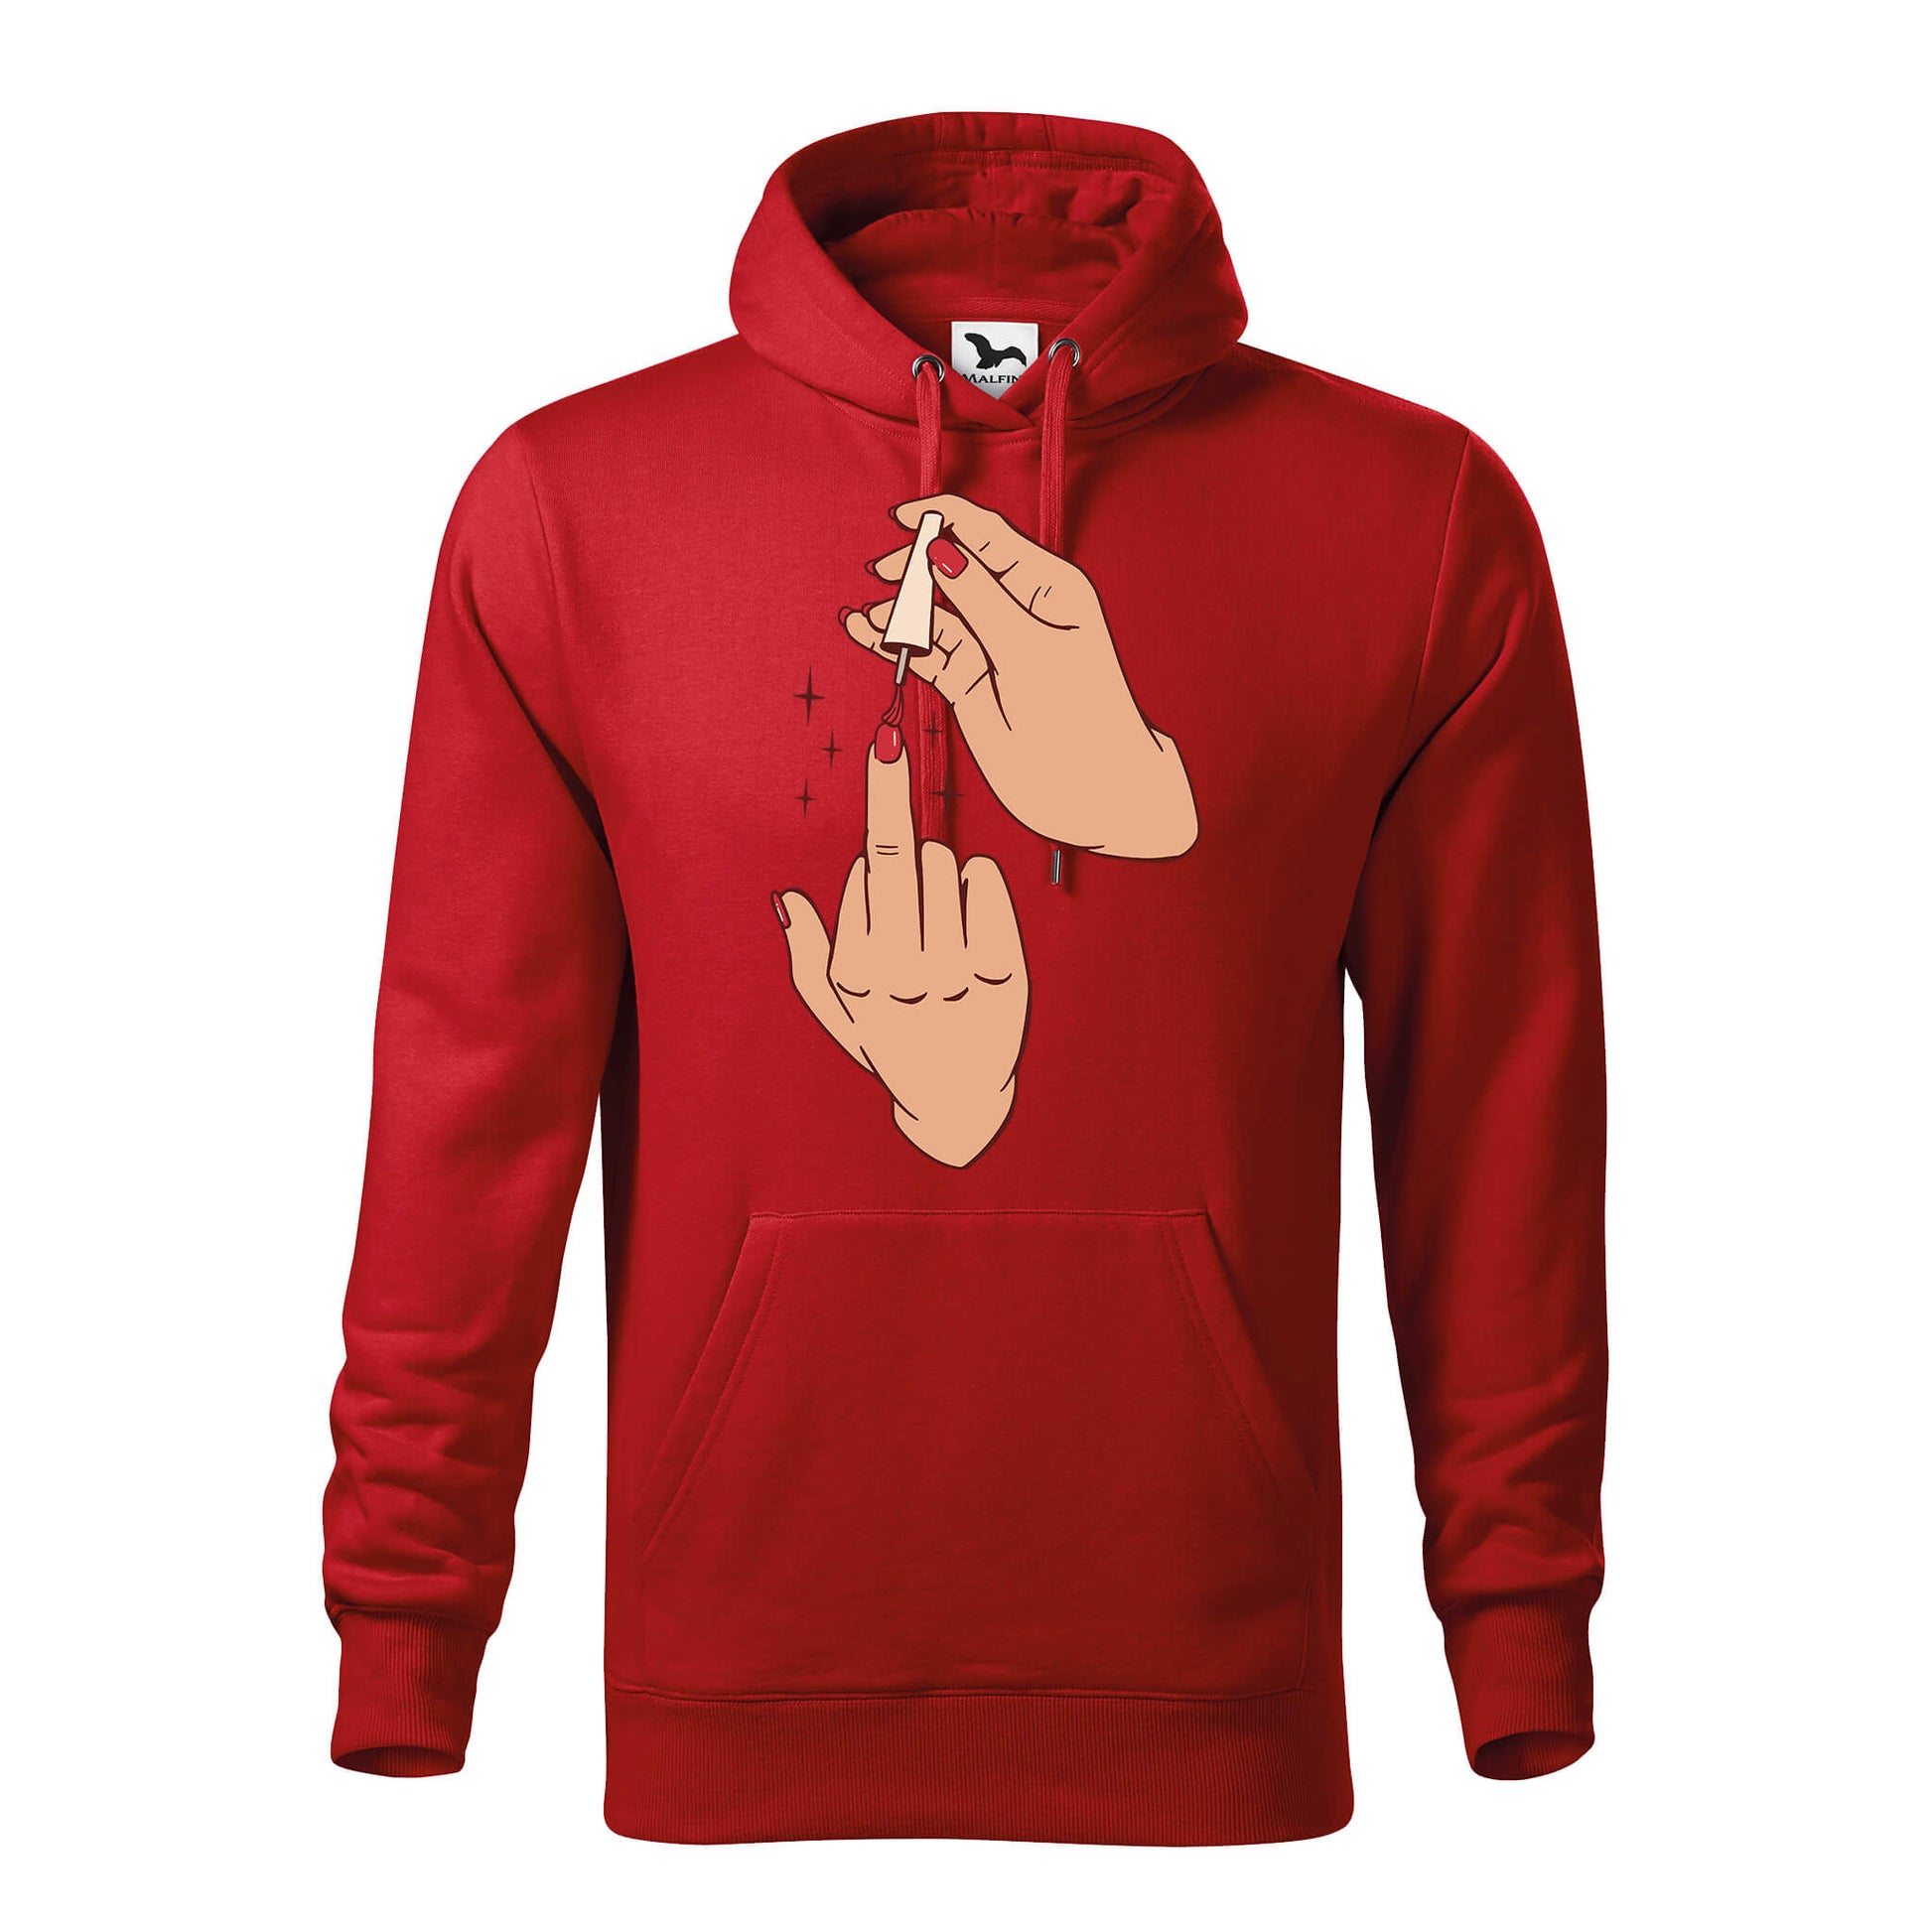 Middle finger nail polish hoodie - rvdesignprint